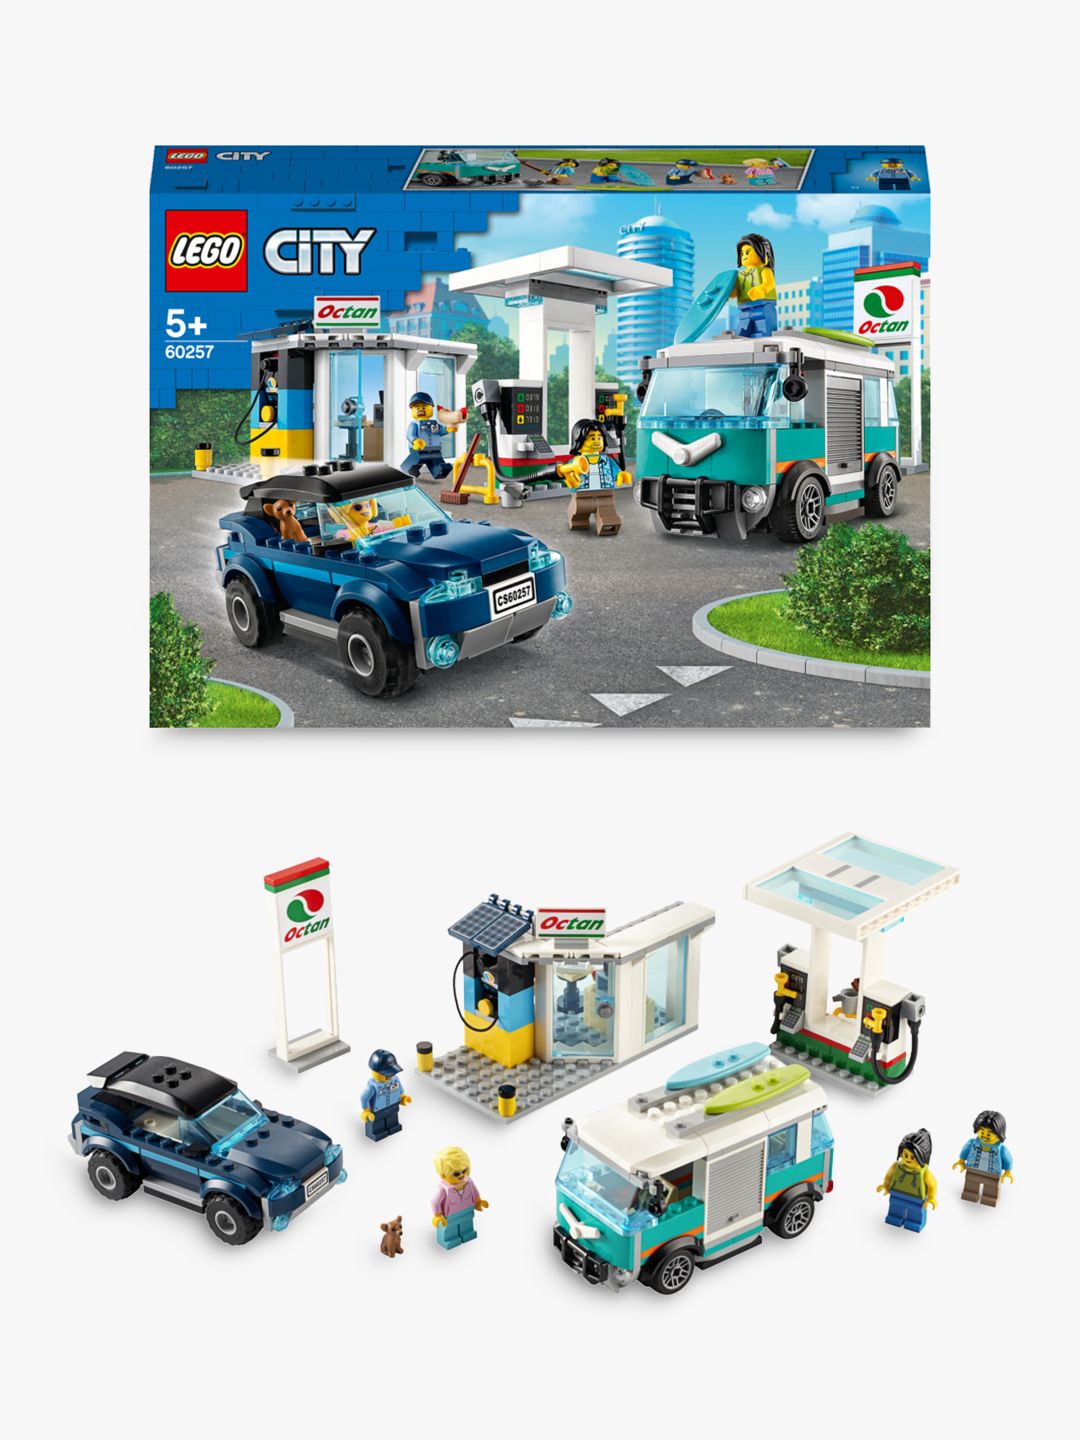 LEGO City 60257 Turbo Wheels Service Station Building Set New Kids Toy Gift 5+ 